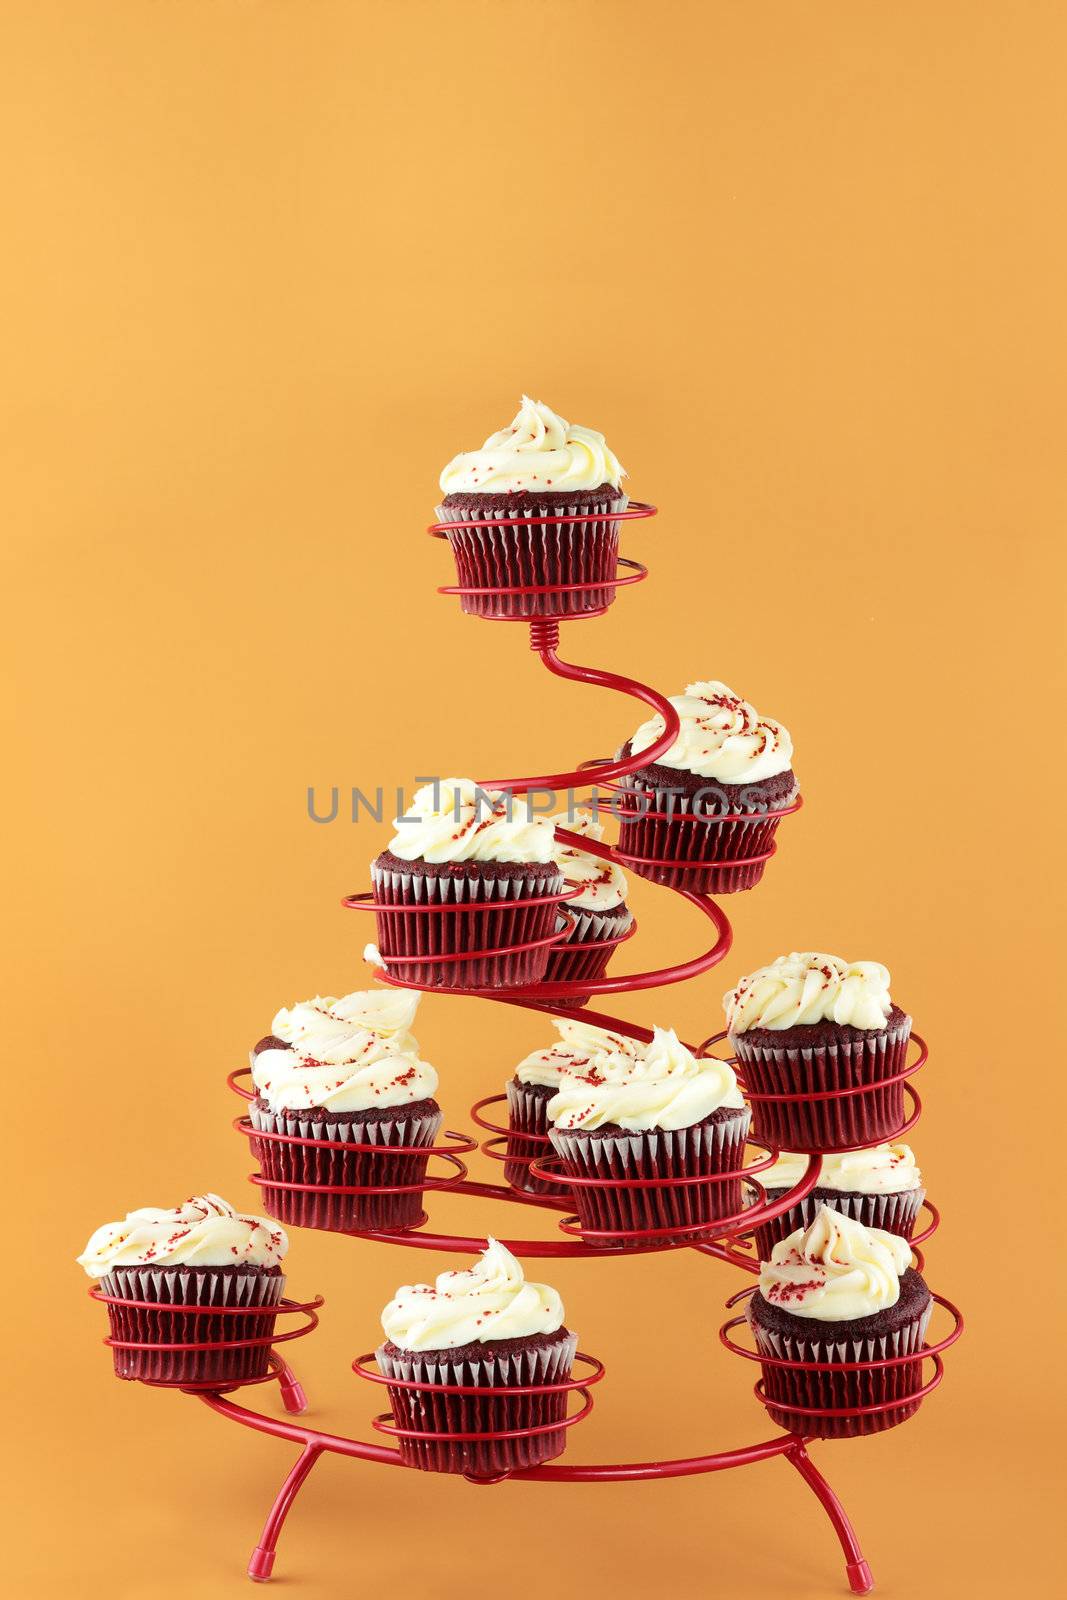 Red Velvet Cupcakes by StephanieFrey